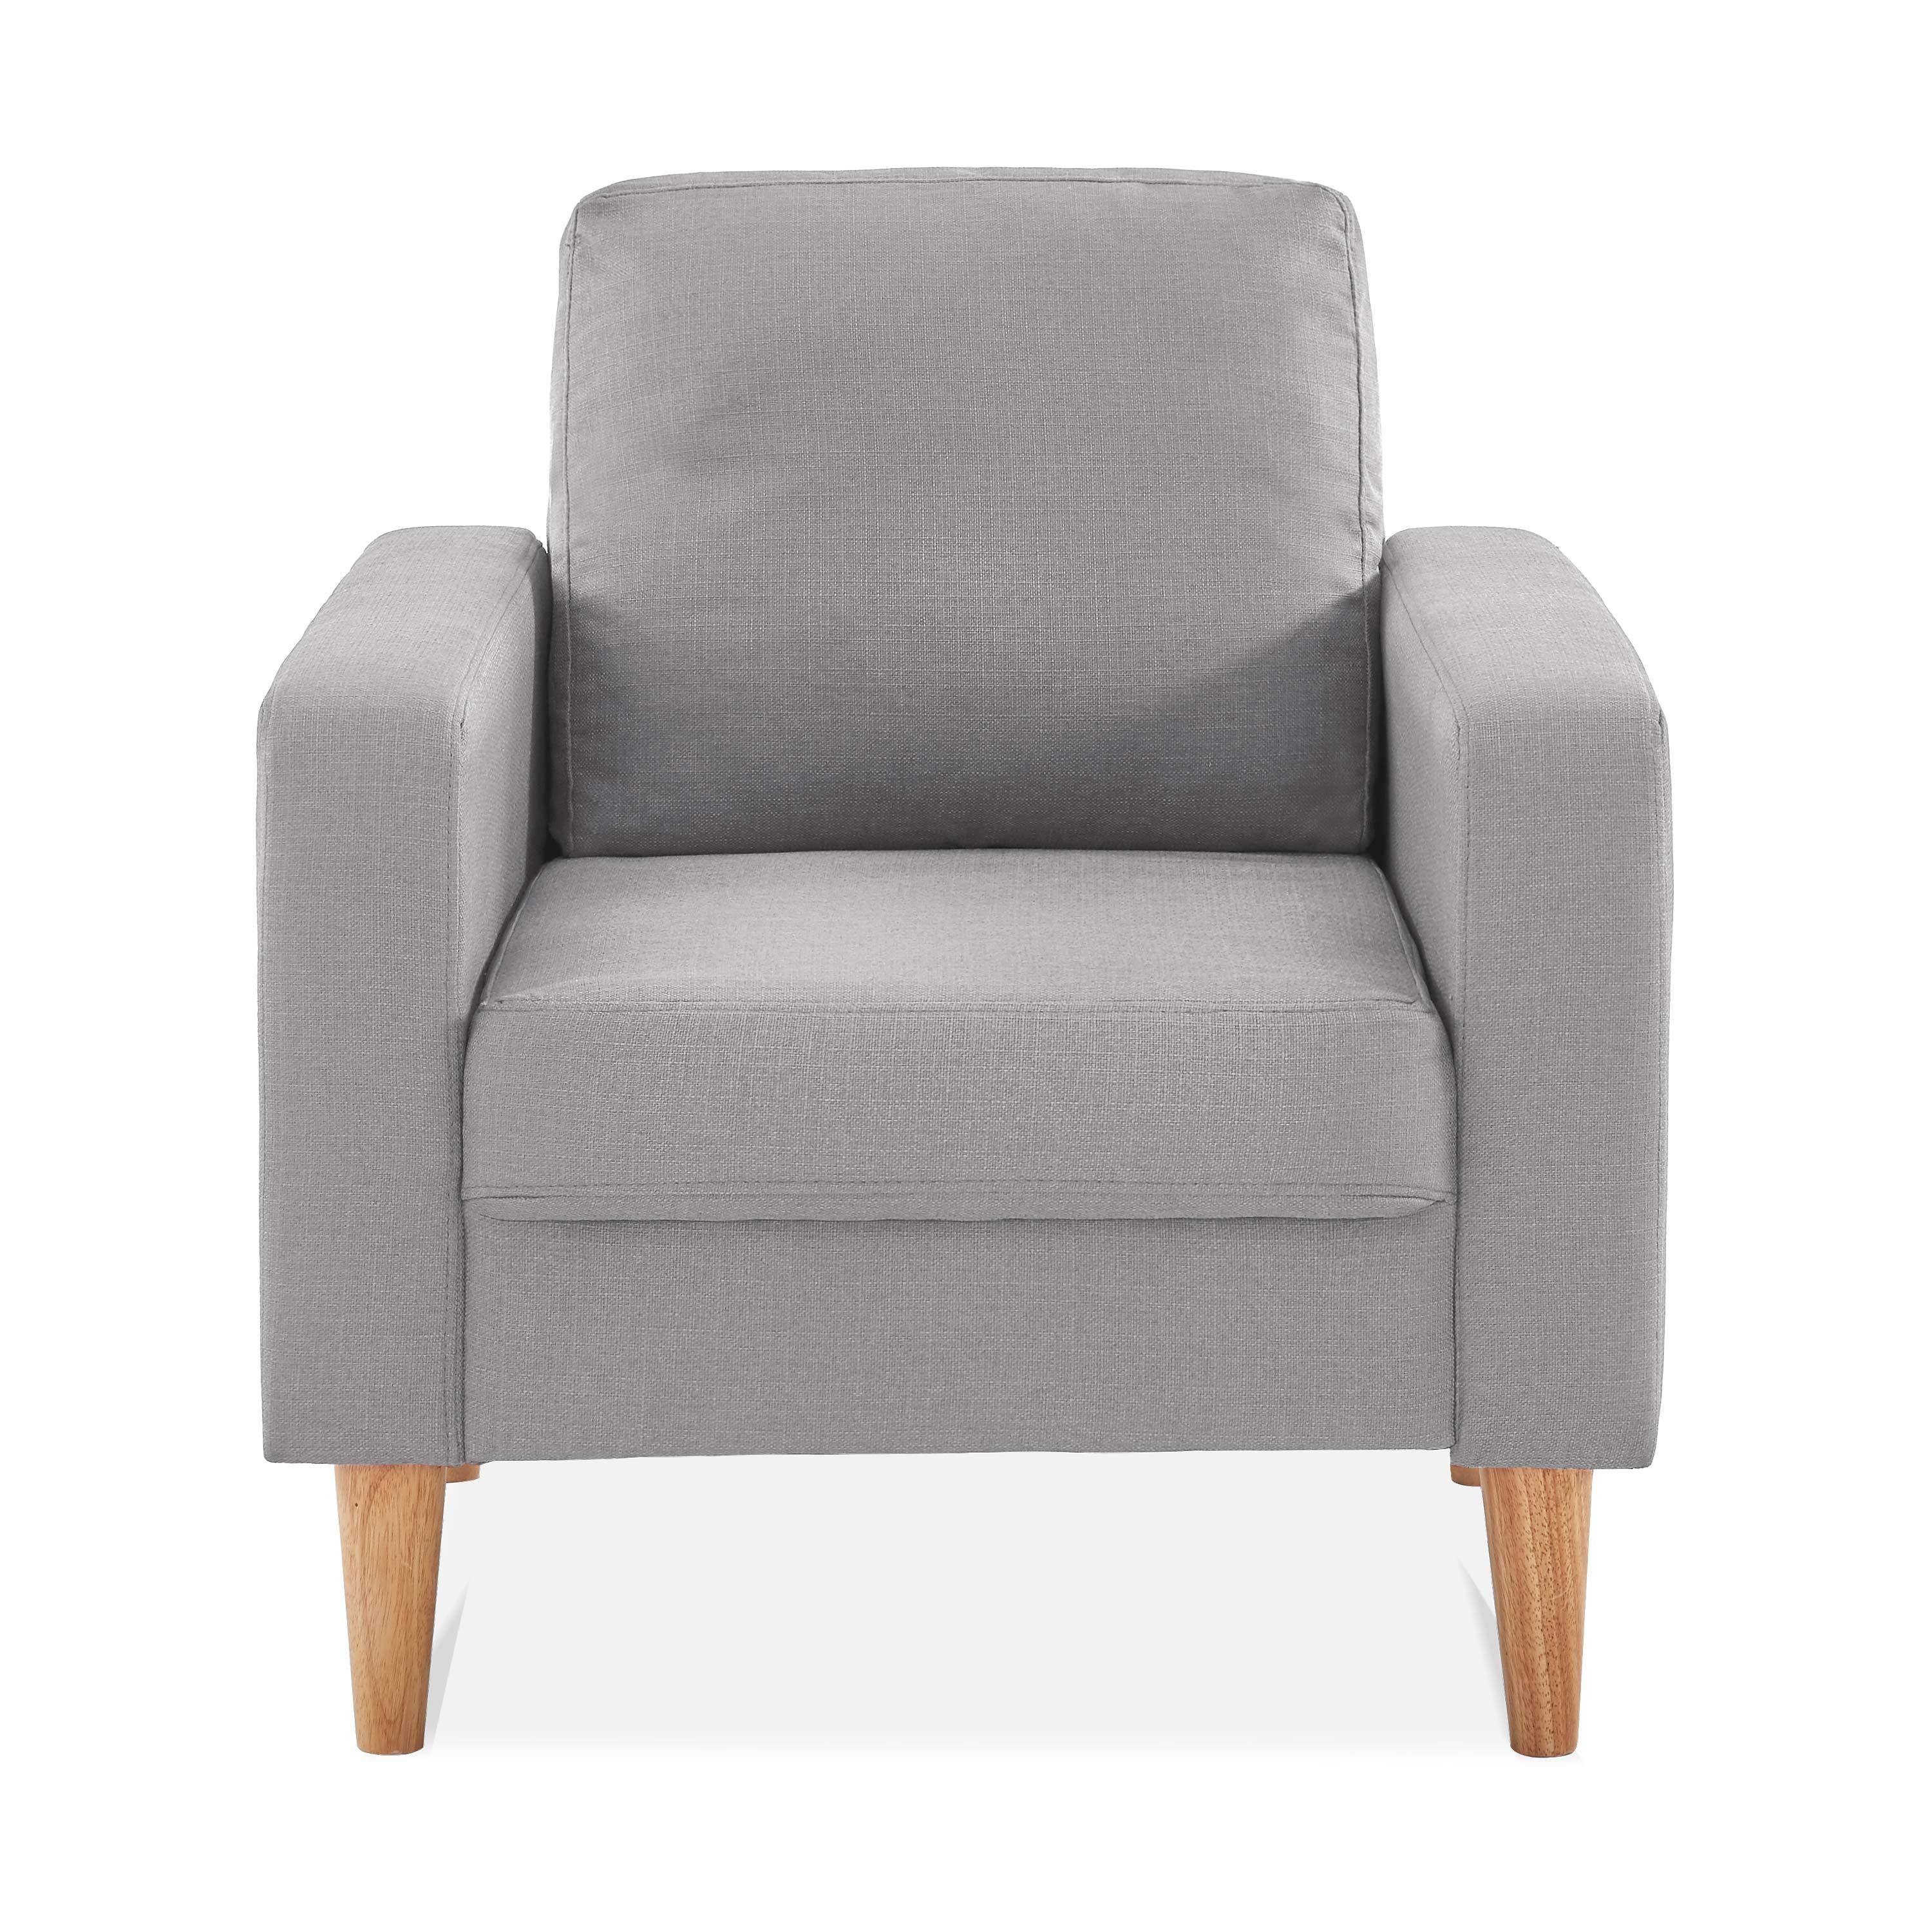 Scandi-style armchair with wooden legs - Bjorn - Light Grey,sweeek,Photo3